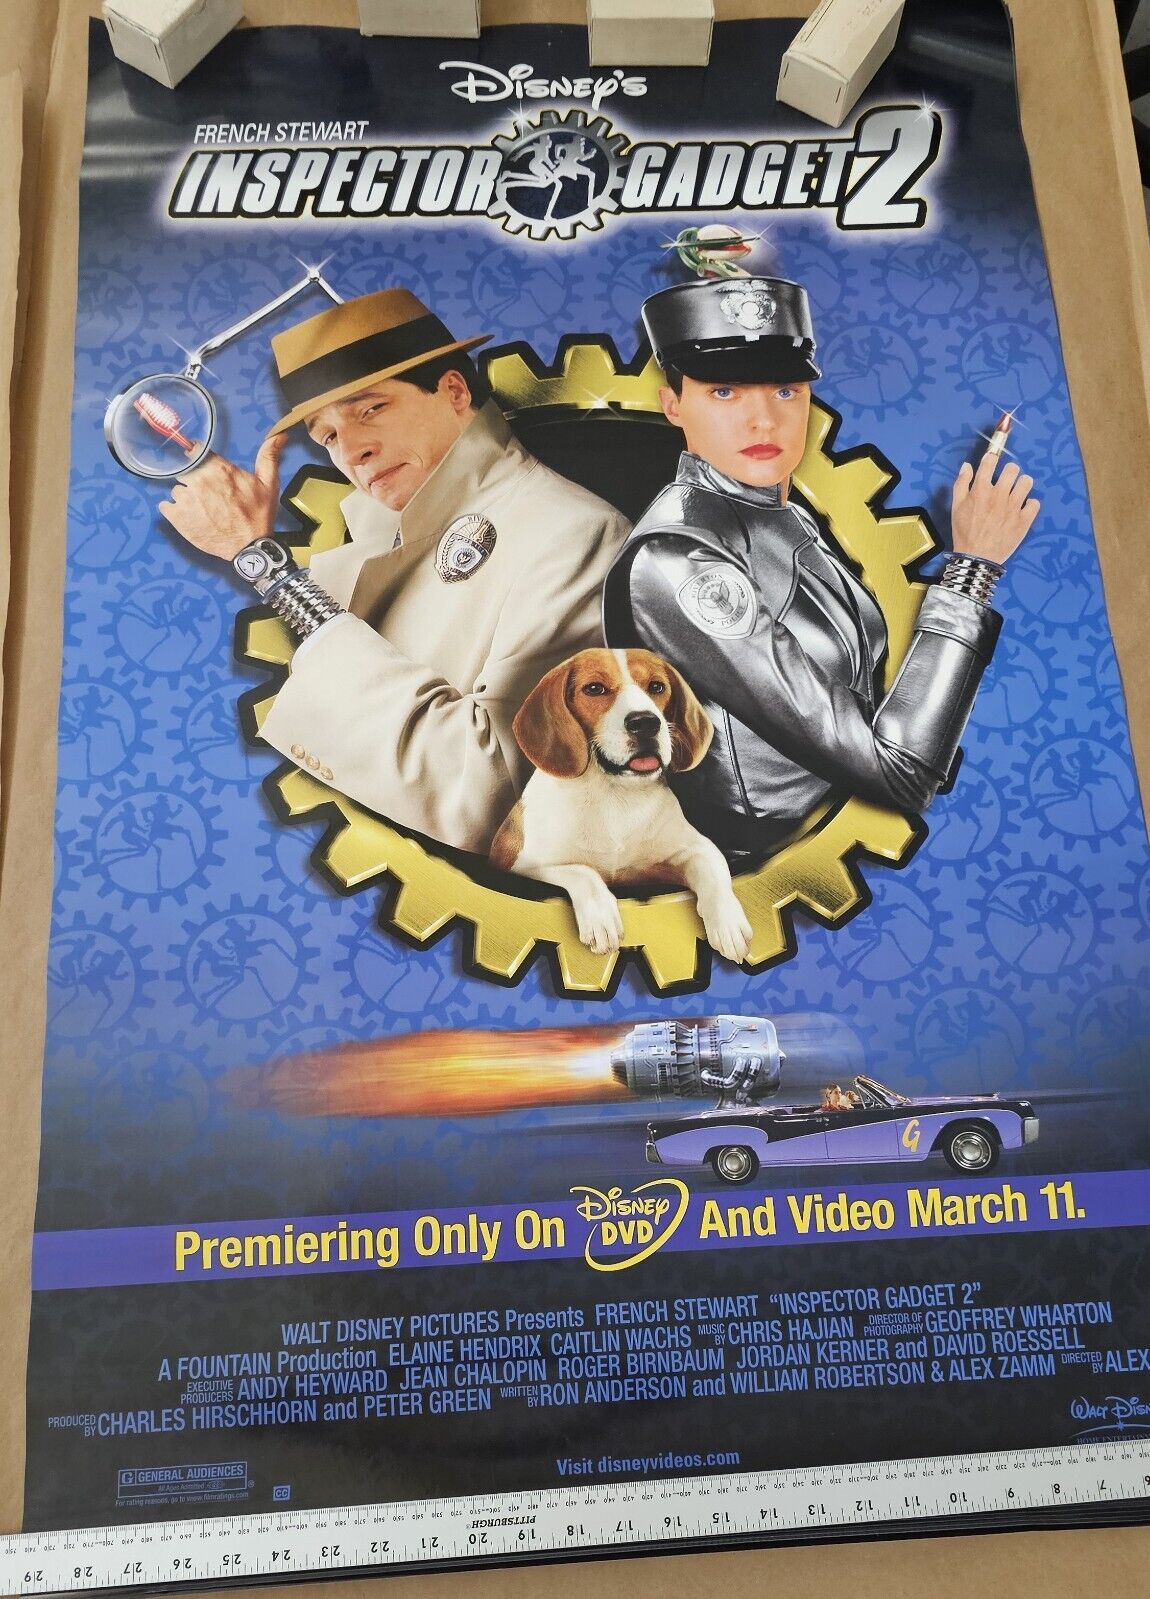 Disney's Inspector Gadget 2 DVD promotional movie poster